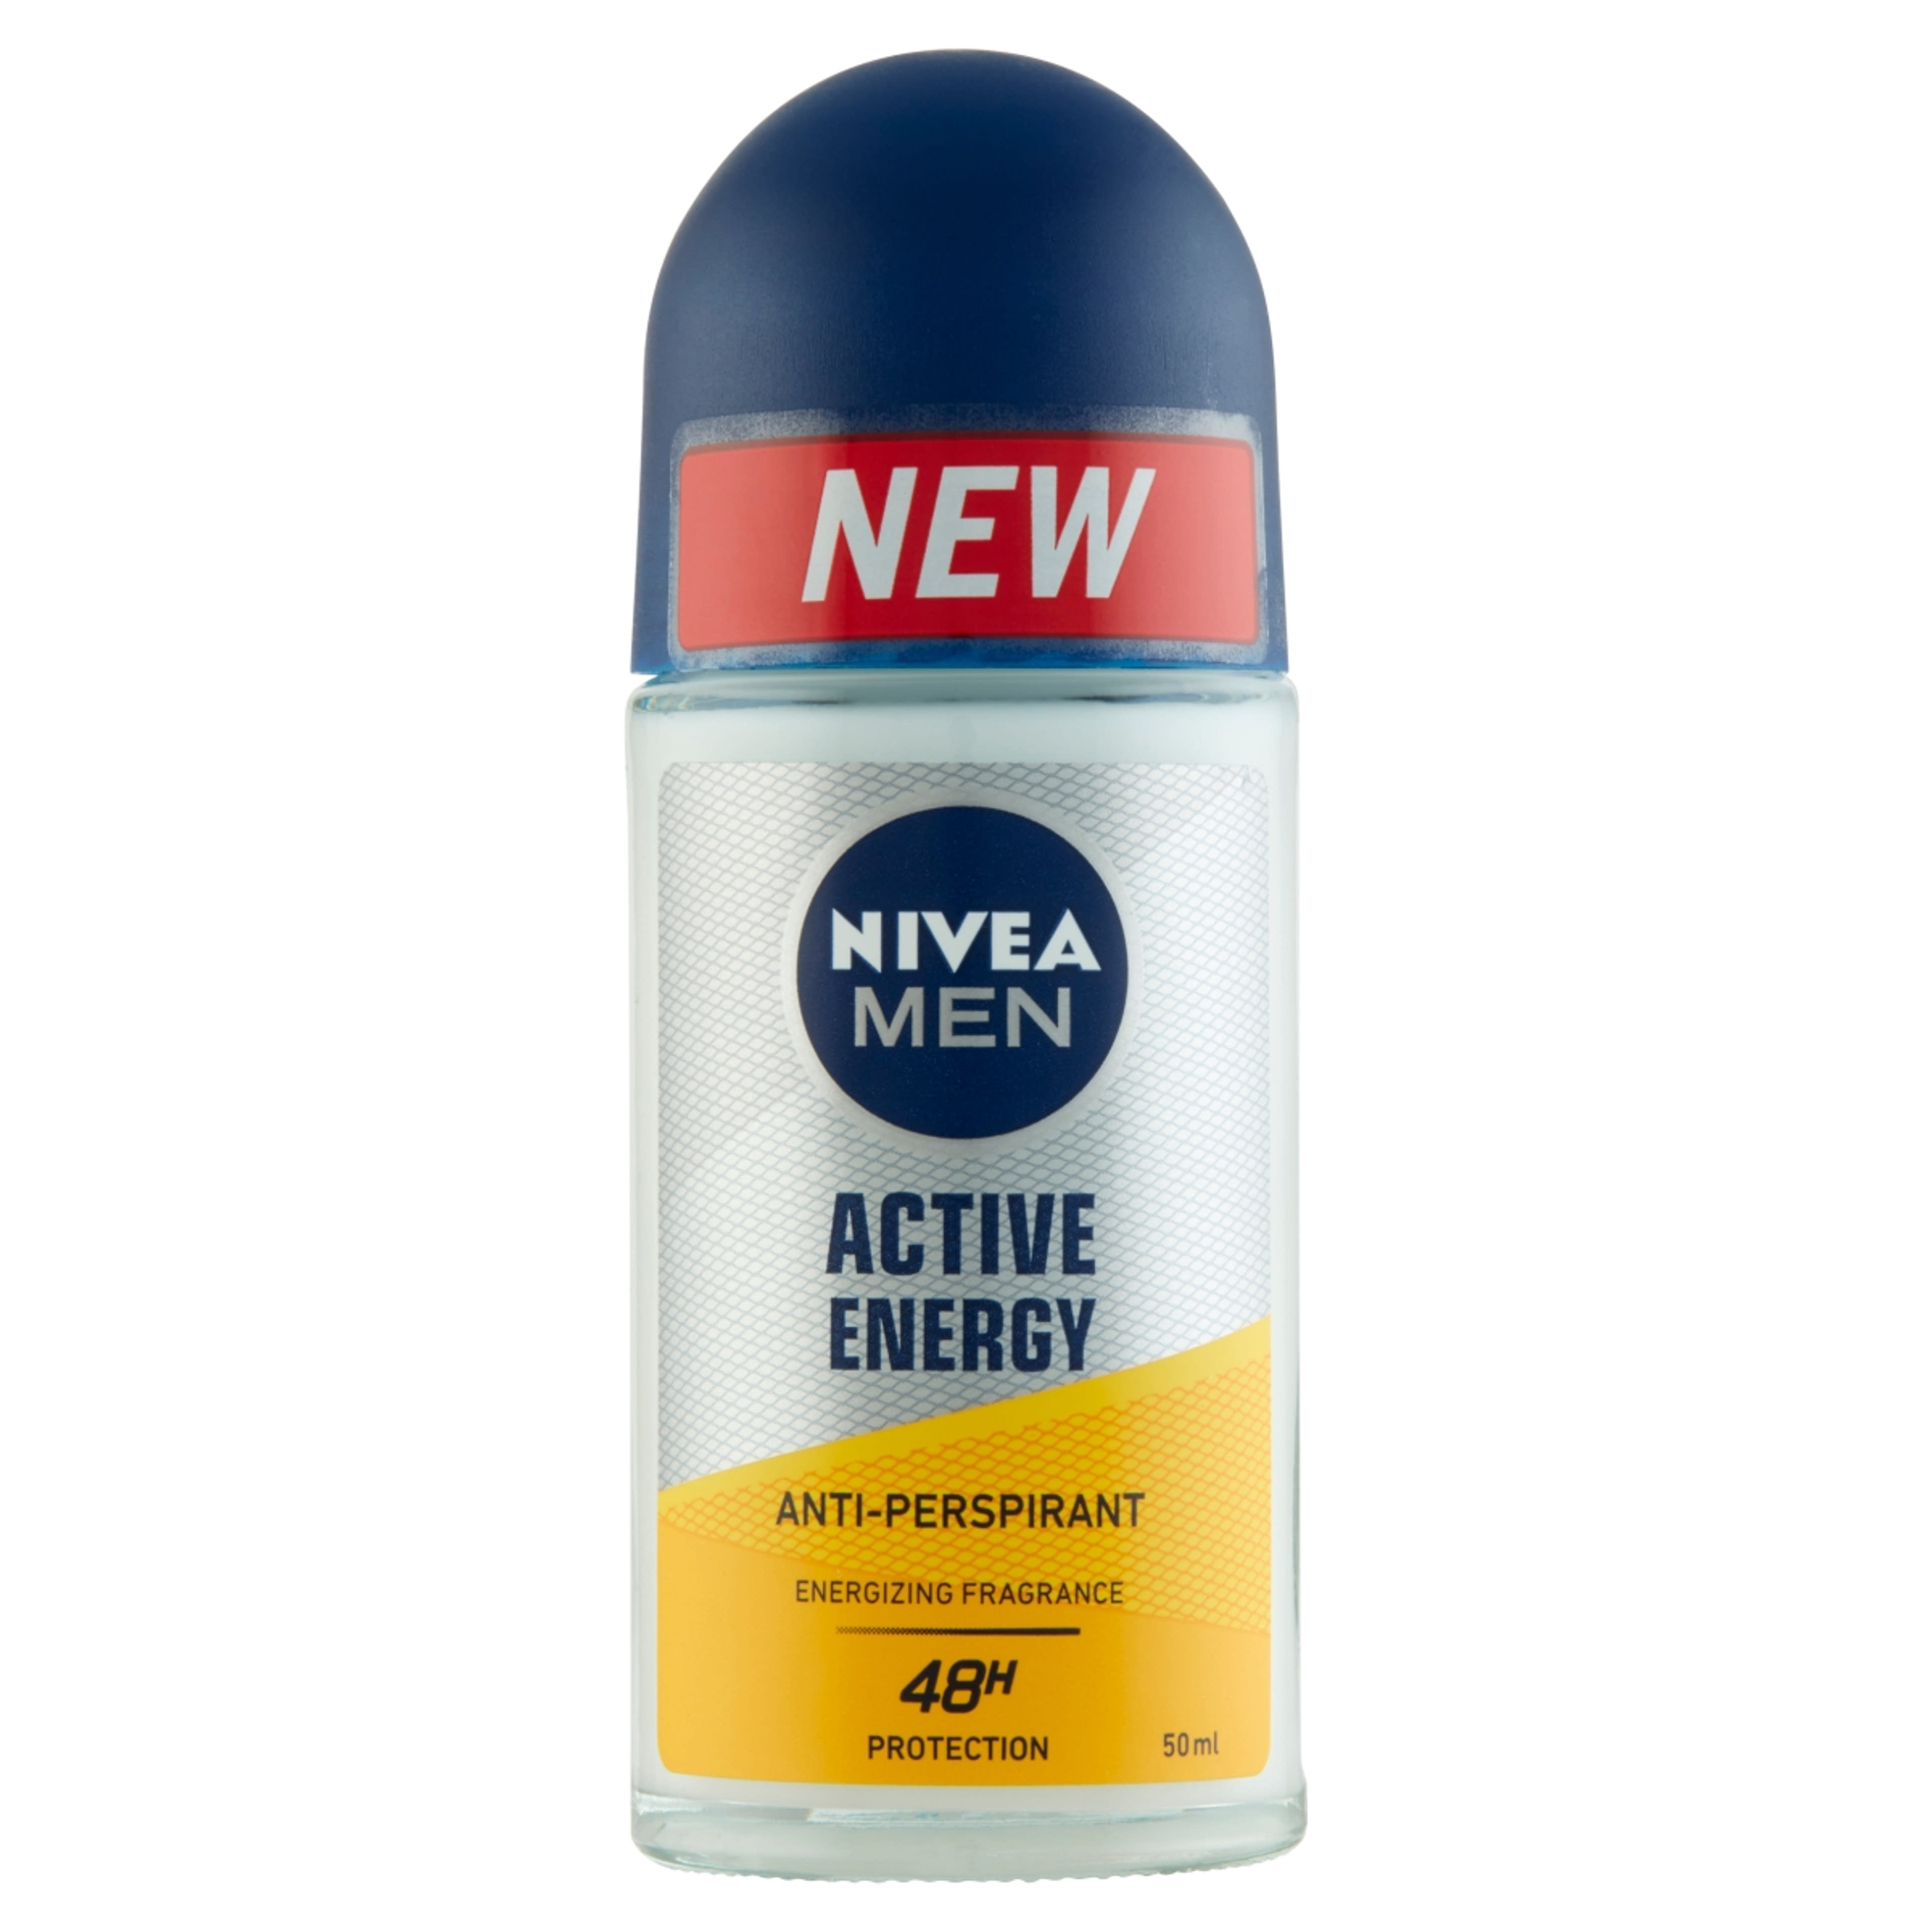 NIVEA MEN roll-on active energy - 50 ml